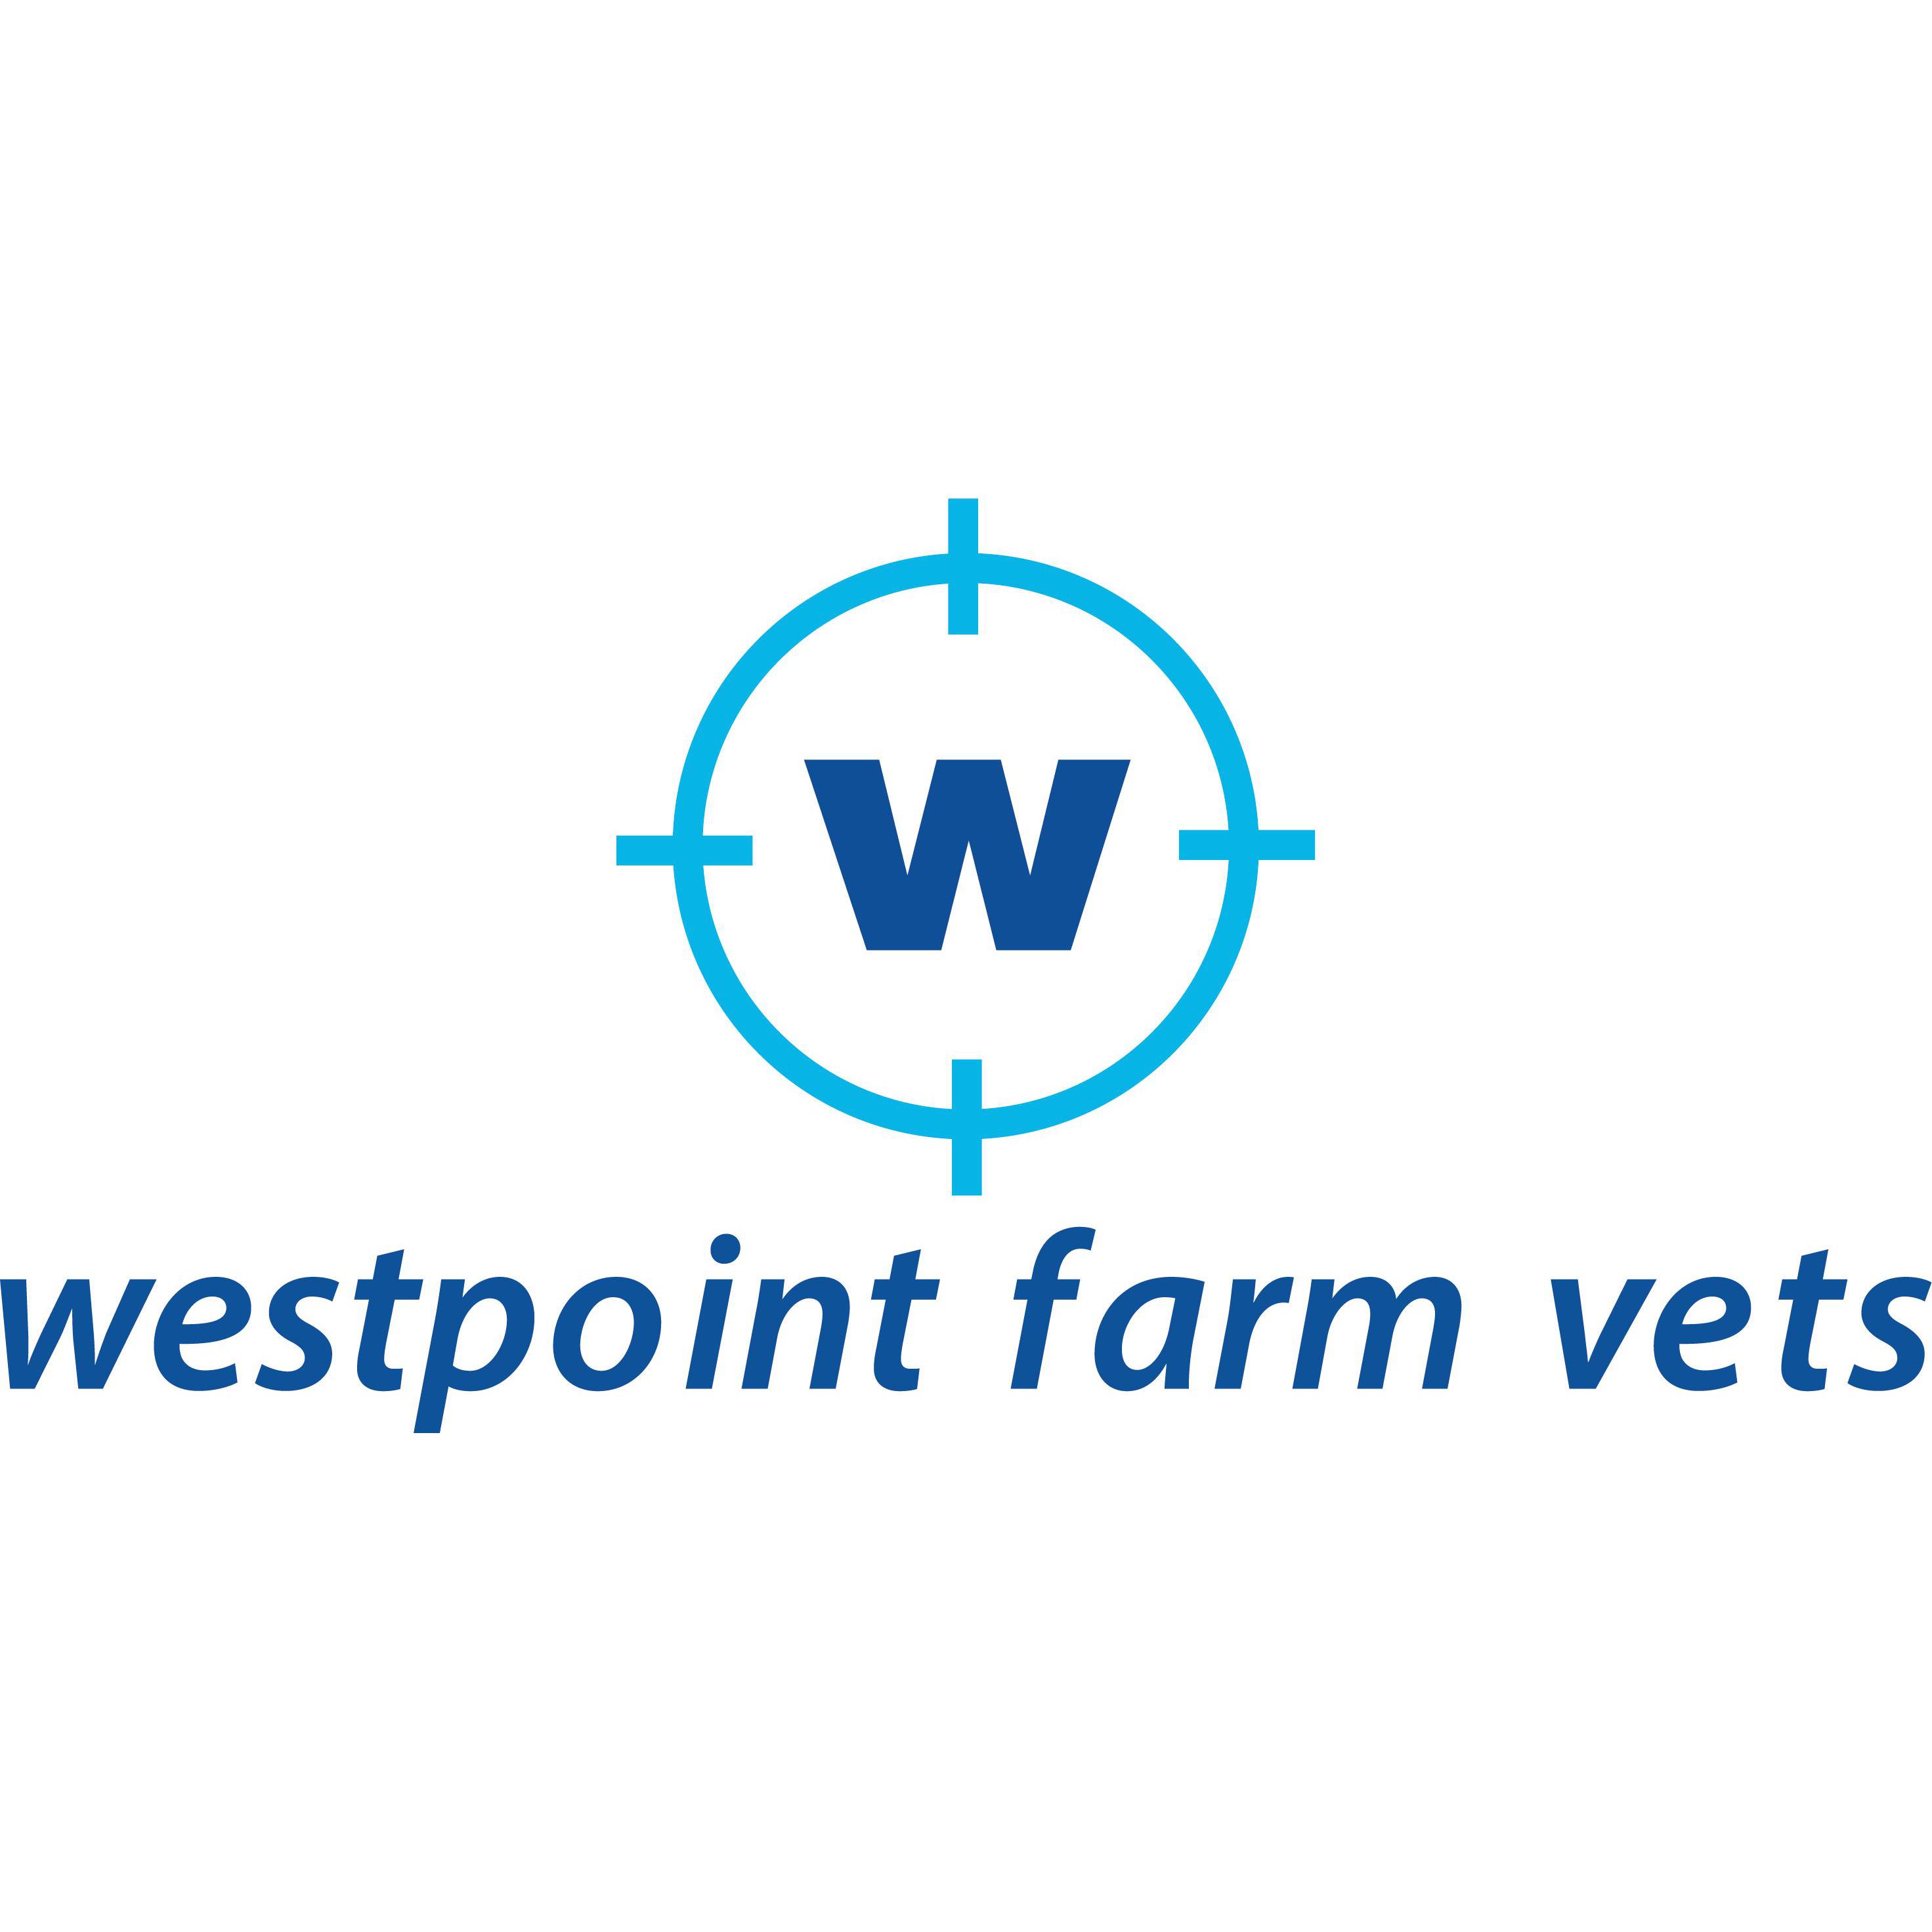 Westpoint Farm Vets, Ashford - Ashford, Kent TN24 0SJ - 01306 628208 | ShowMeLocal.com